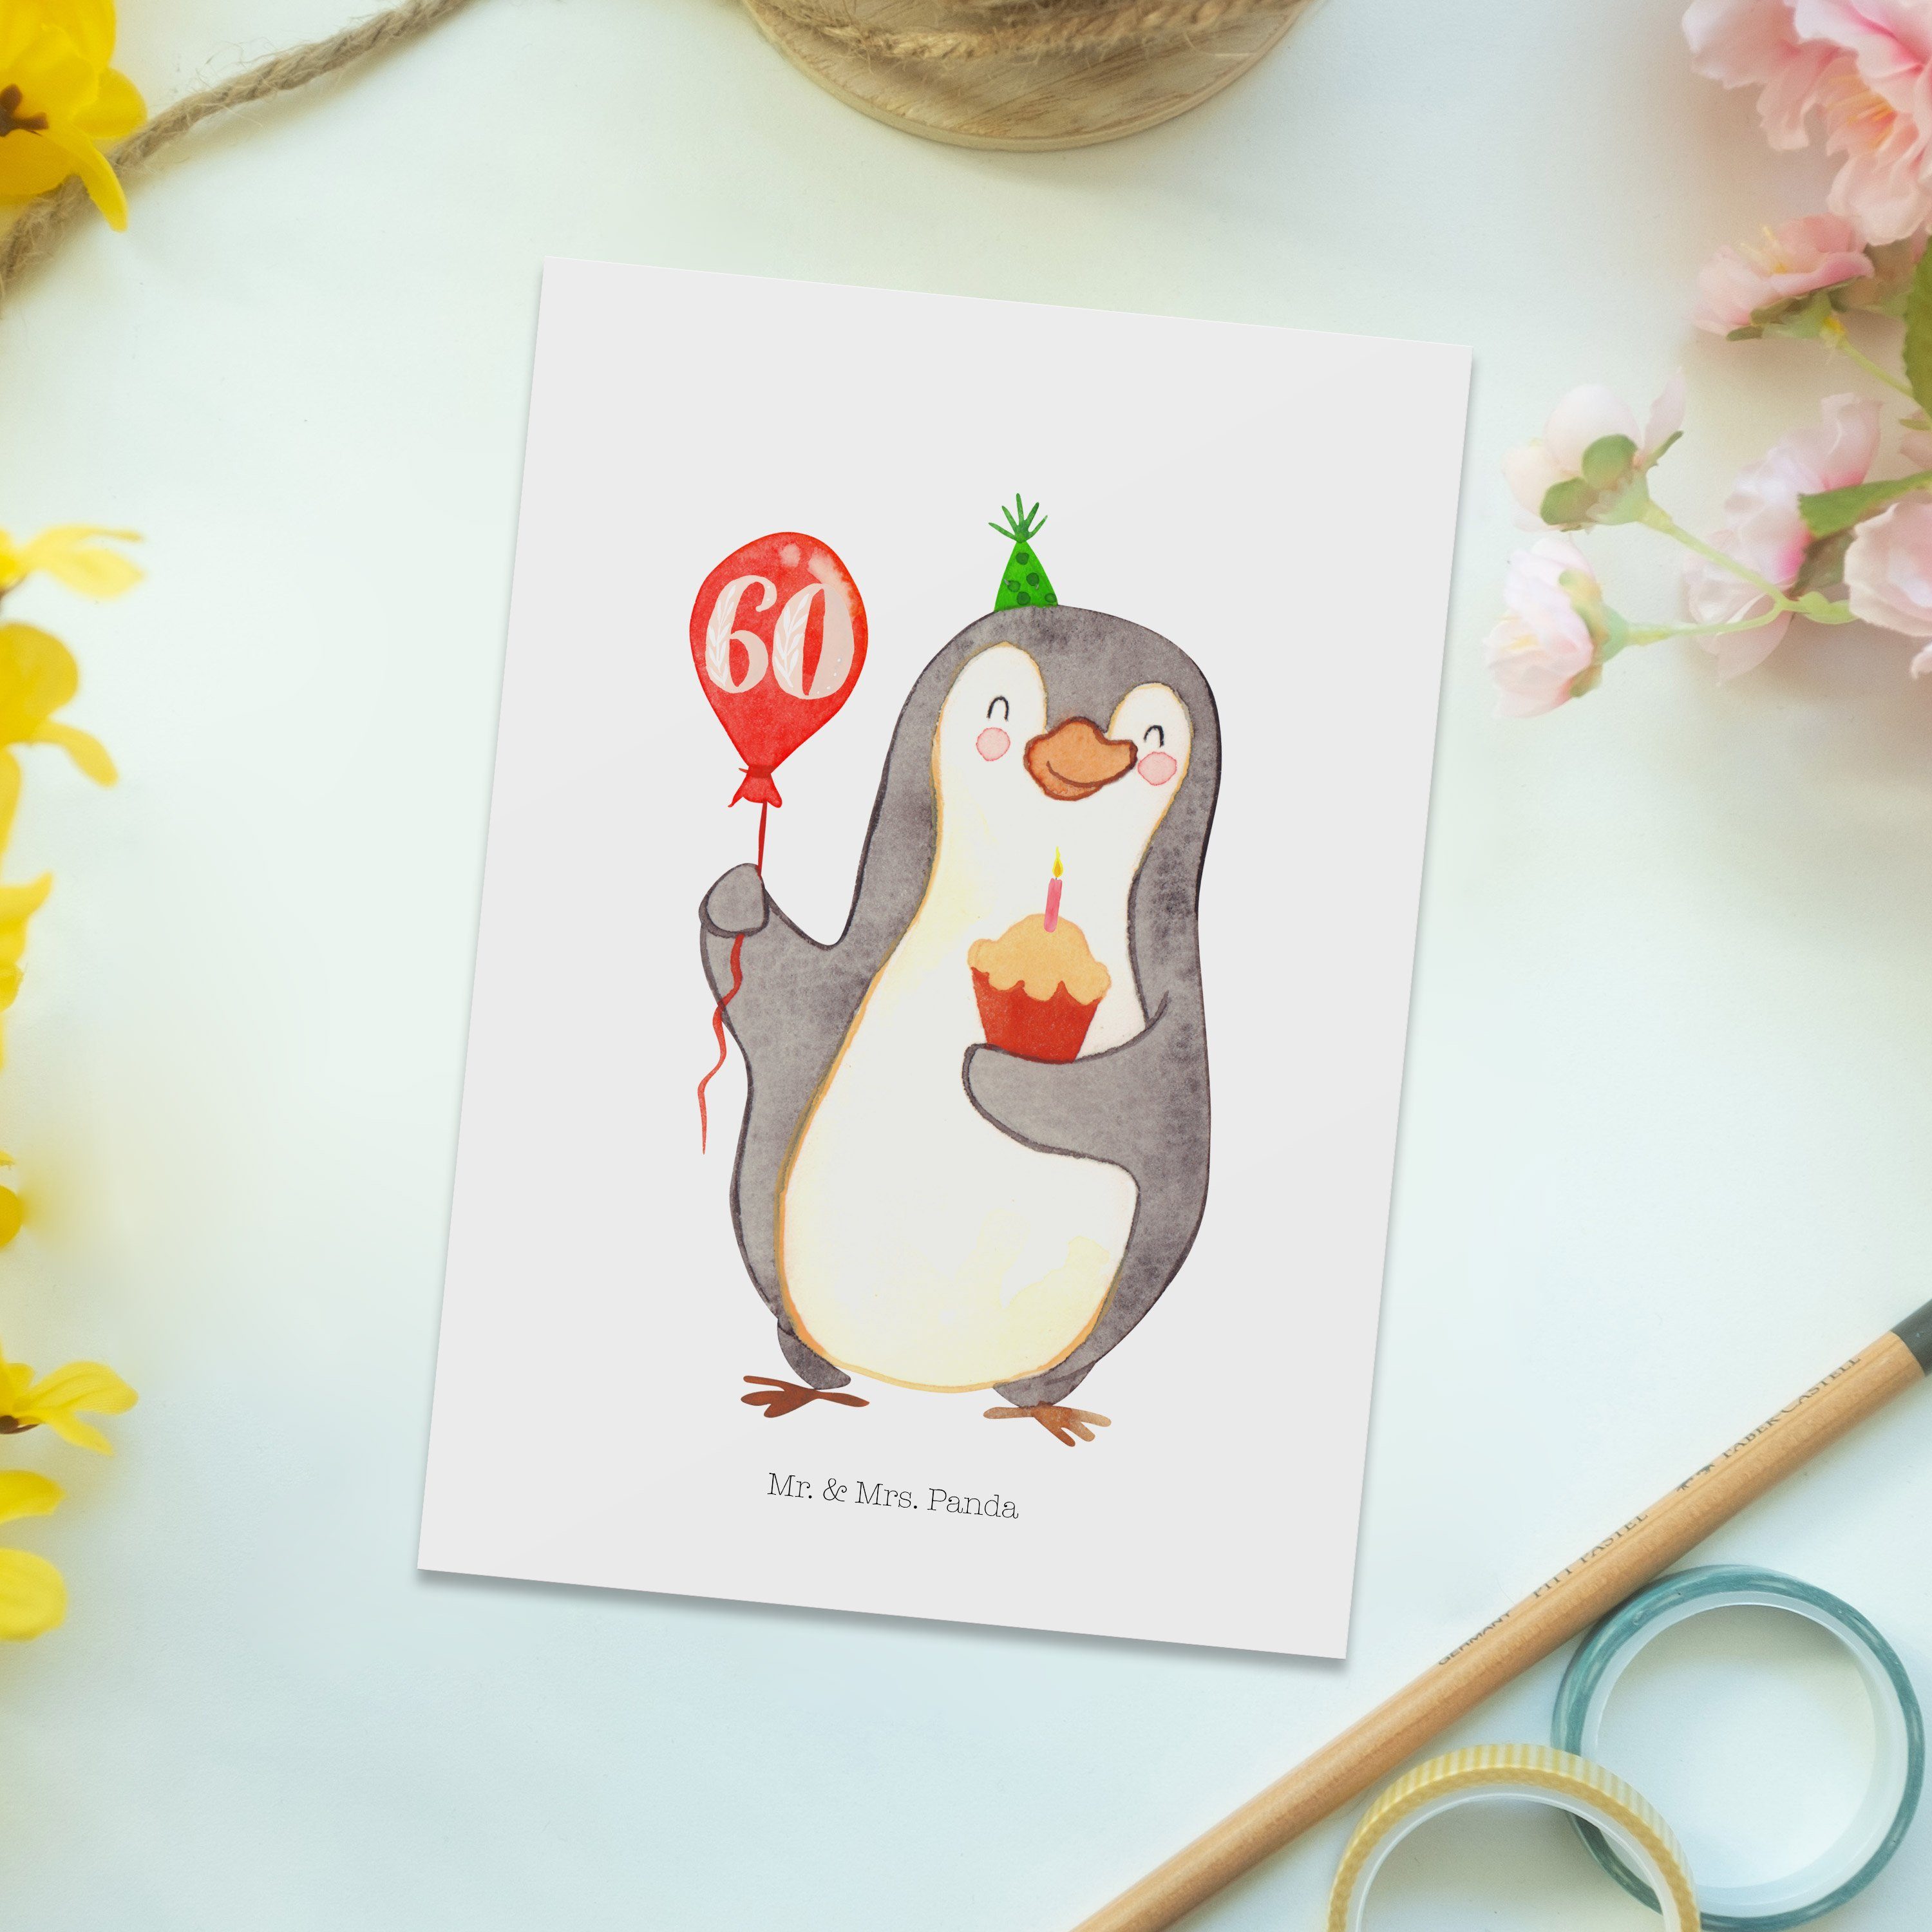 Mr. & Mrs. Panda Postkarte Weiß Luftballon 60. - Dankeskar Party, Geschenk, Pinguin - Geburtstag